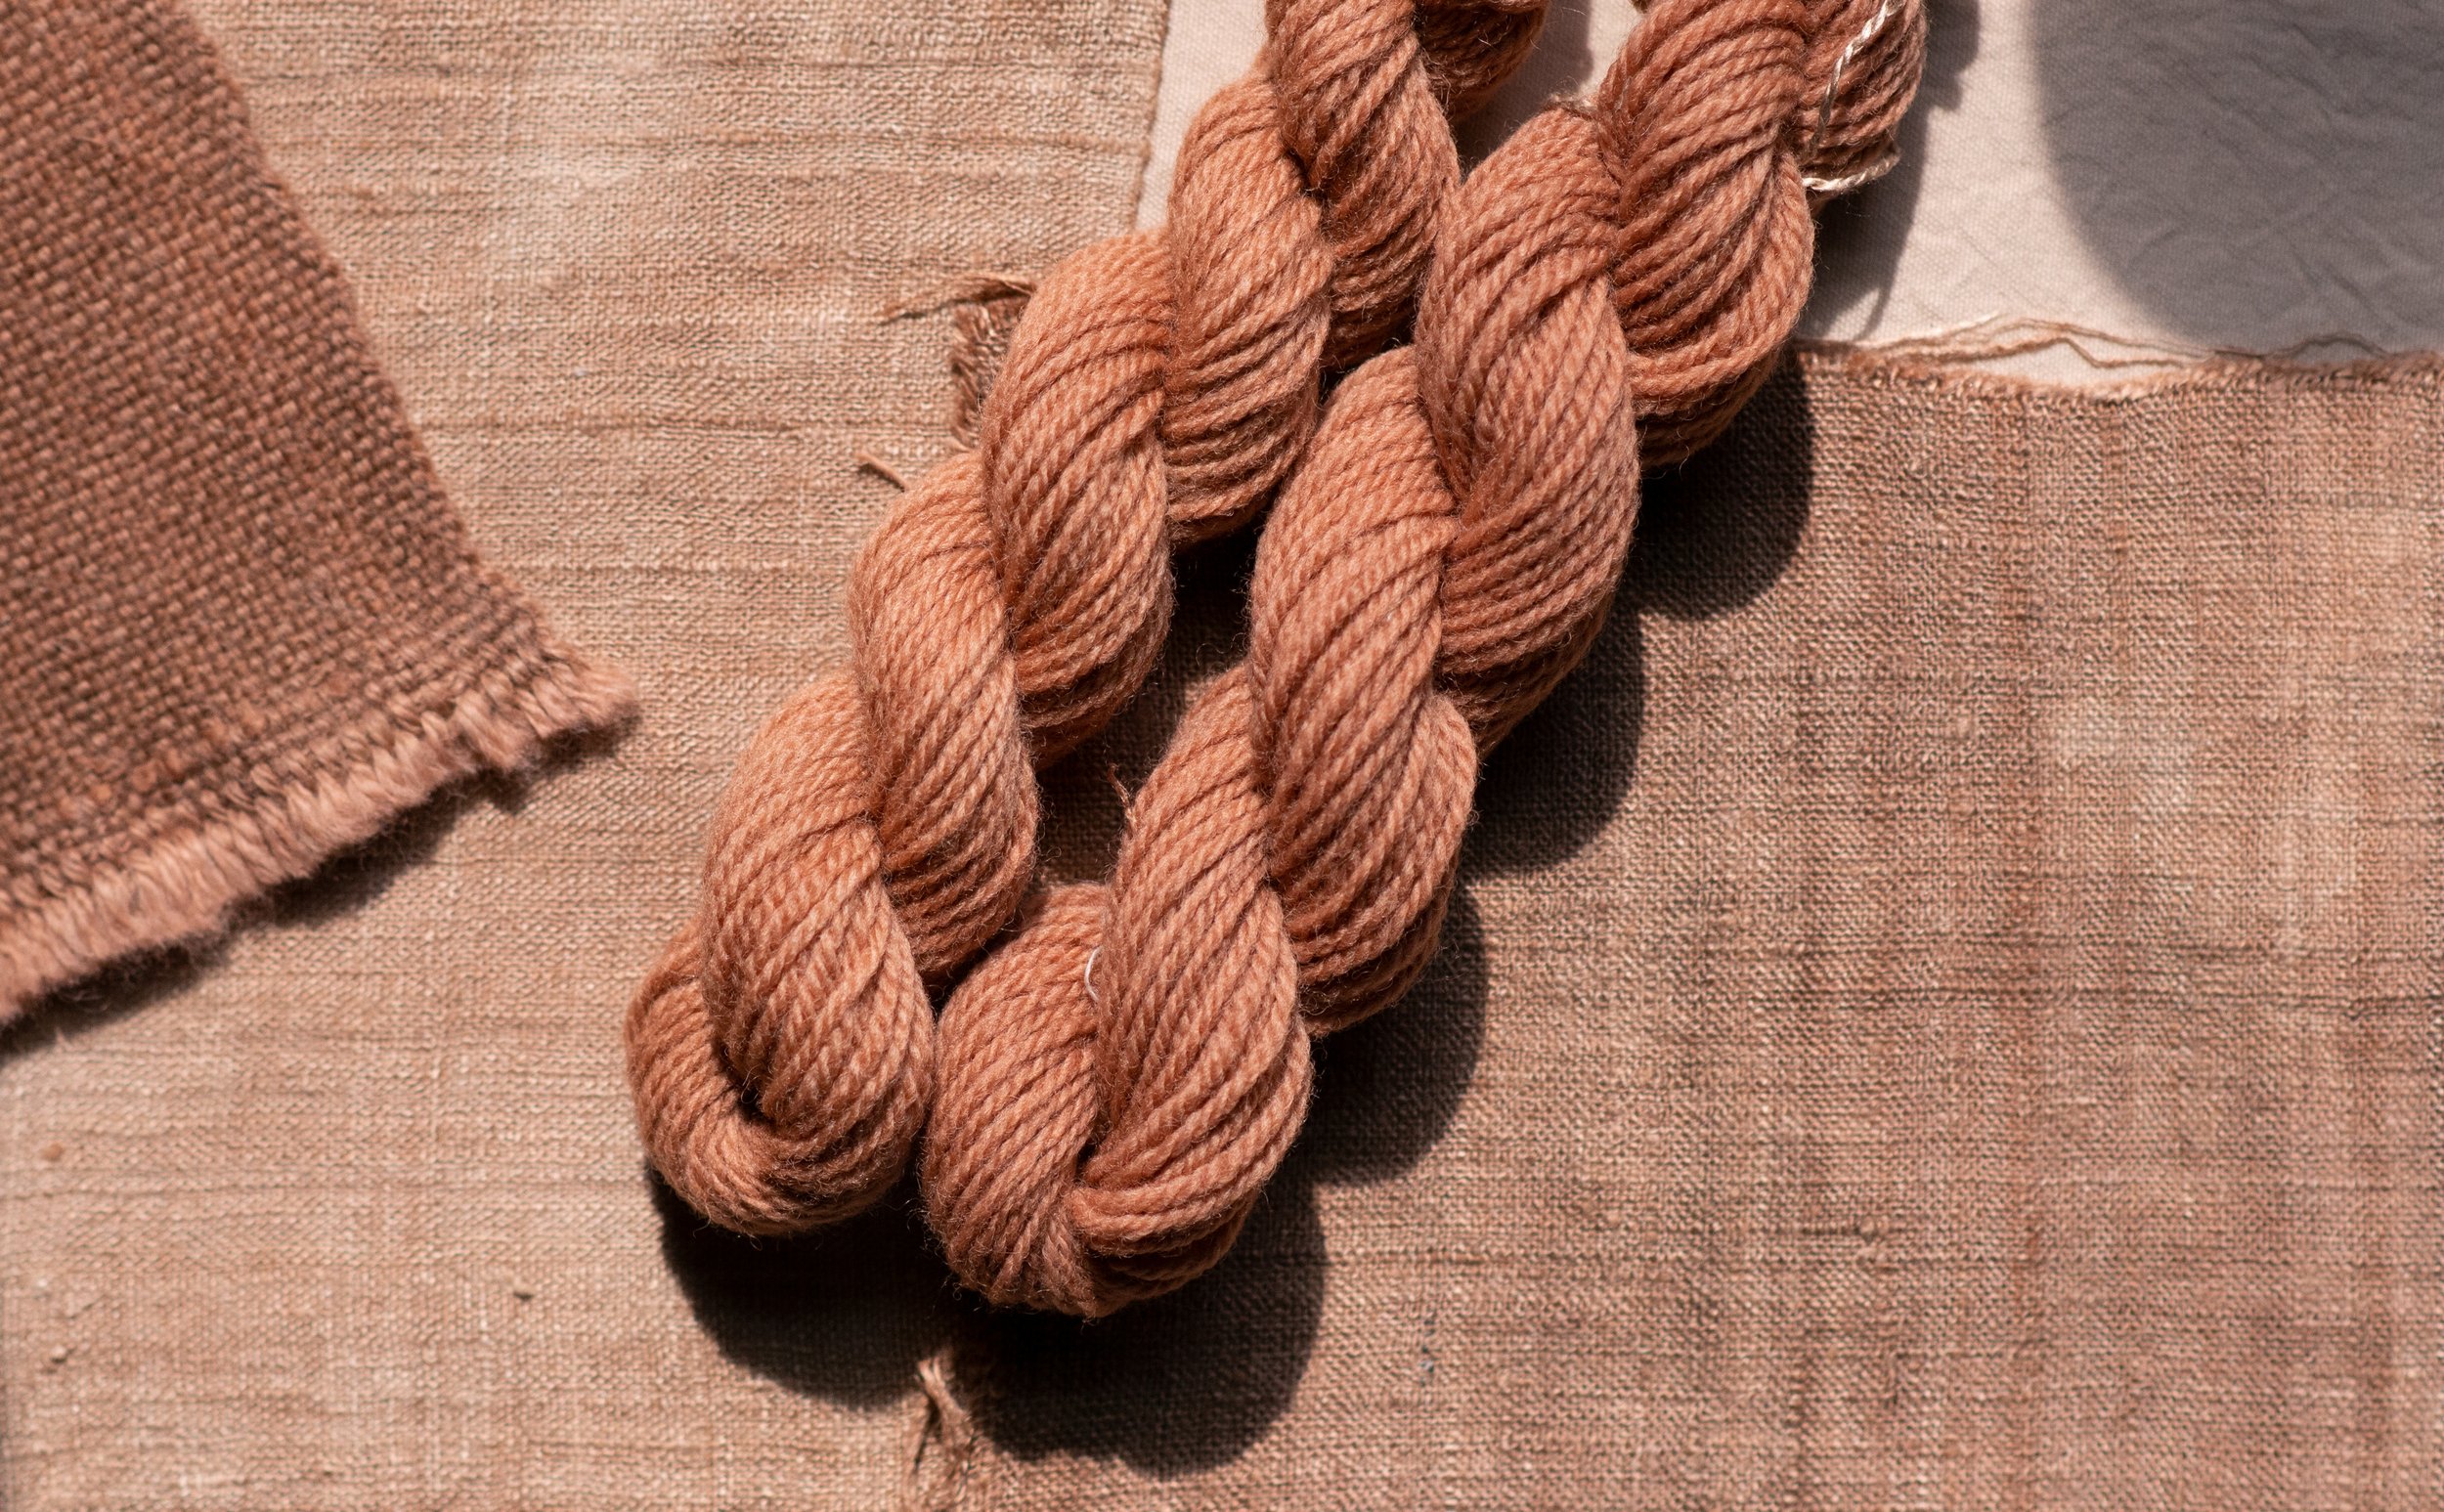 Walnut + iron  How to dye fabric, Natural dye fabric, Botanical dyeing